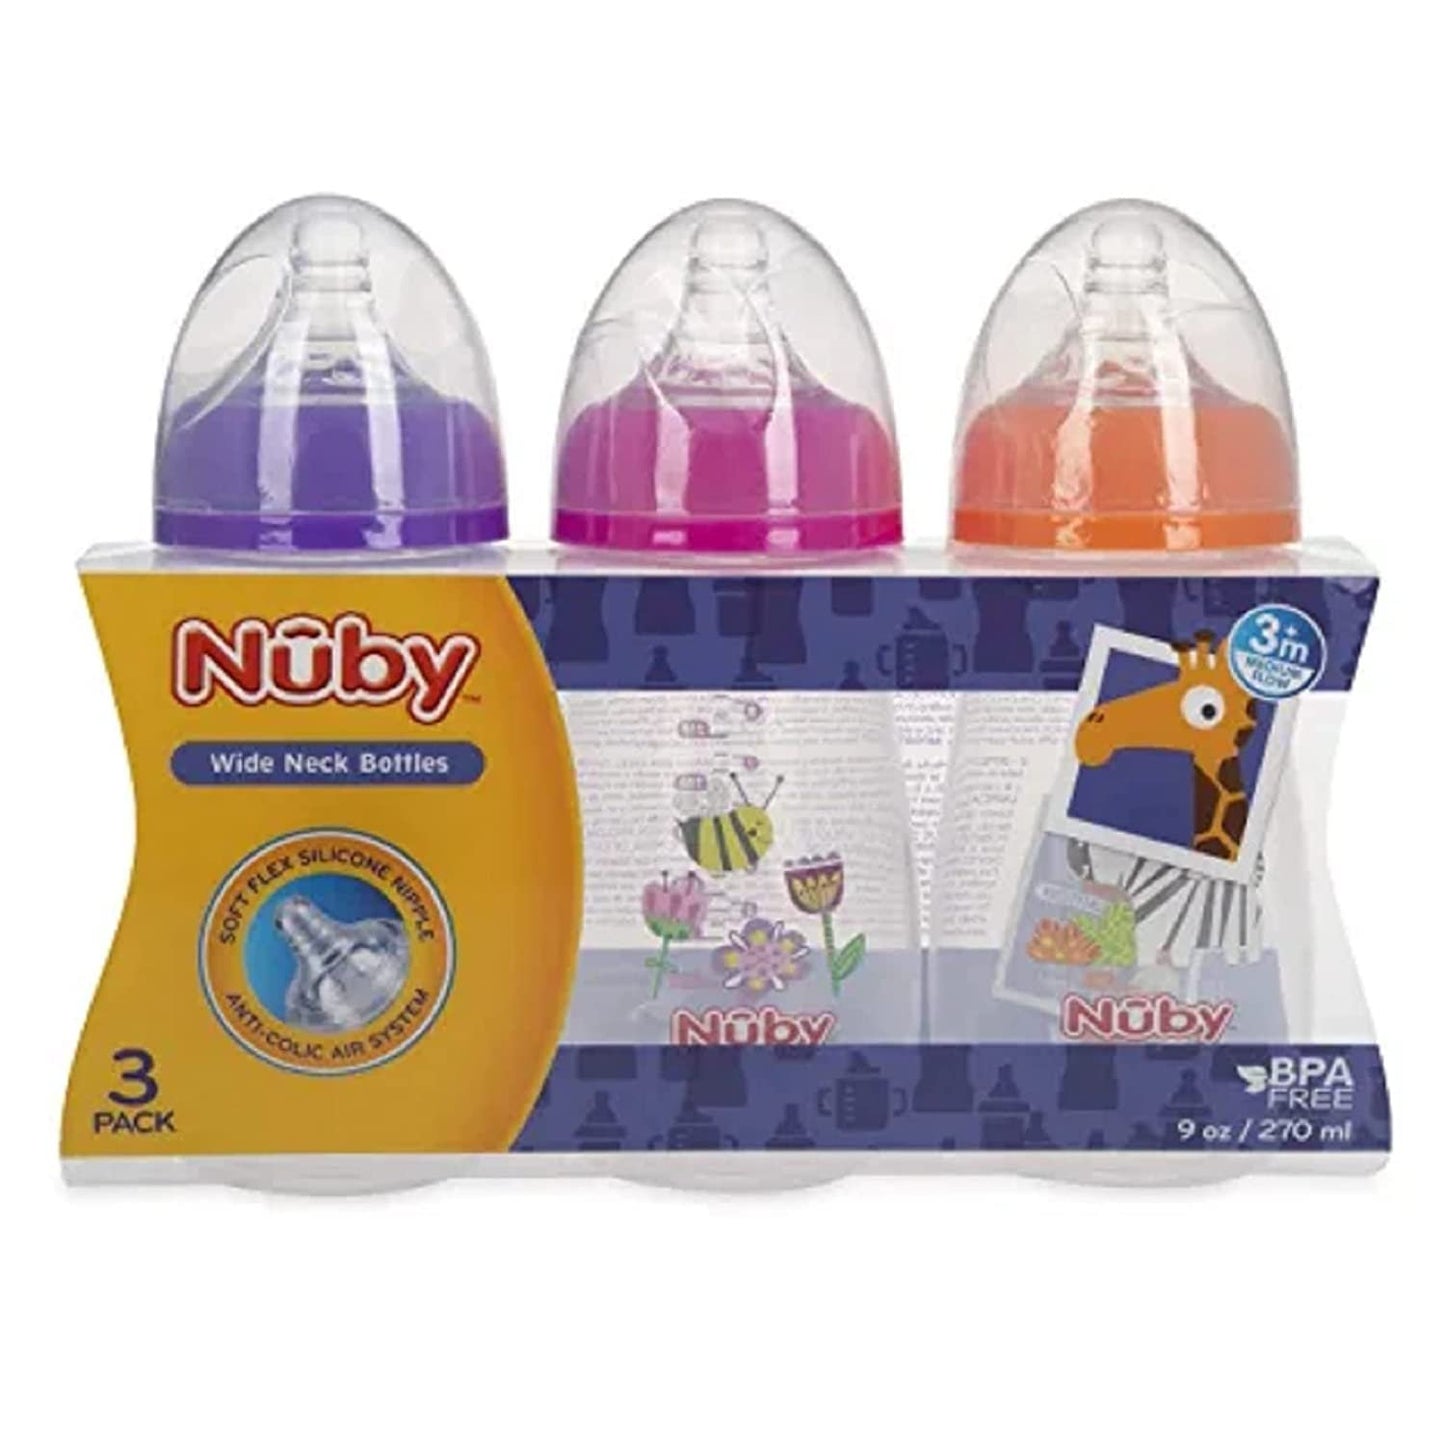 Nuby Tritan Wide Neck Non-Drip Bottles with Anti-Colic Air System: 9oz./ 270 Ml, 3 Pack, 0M+, Purple/Pink/Orange